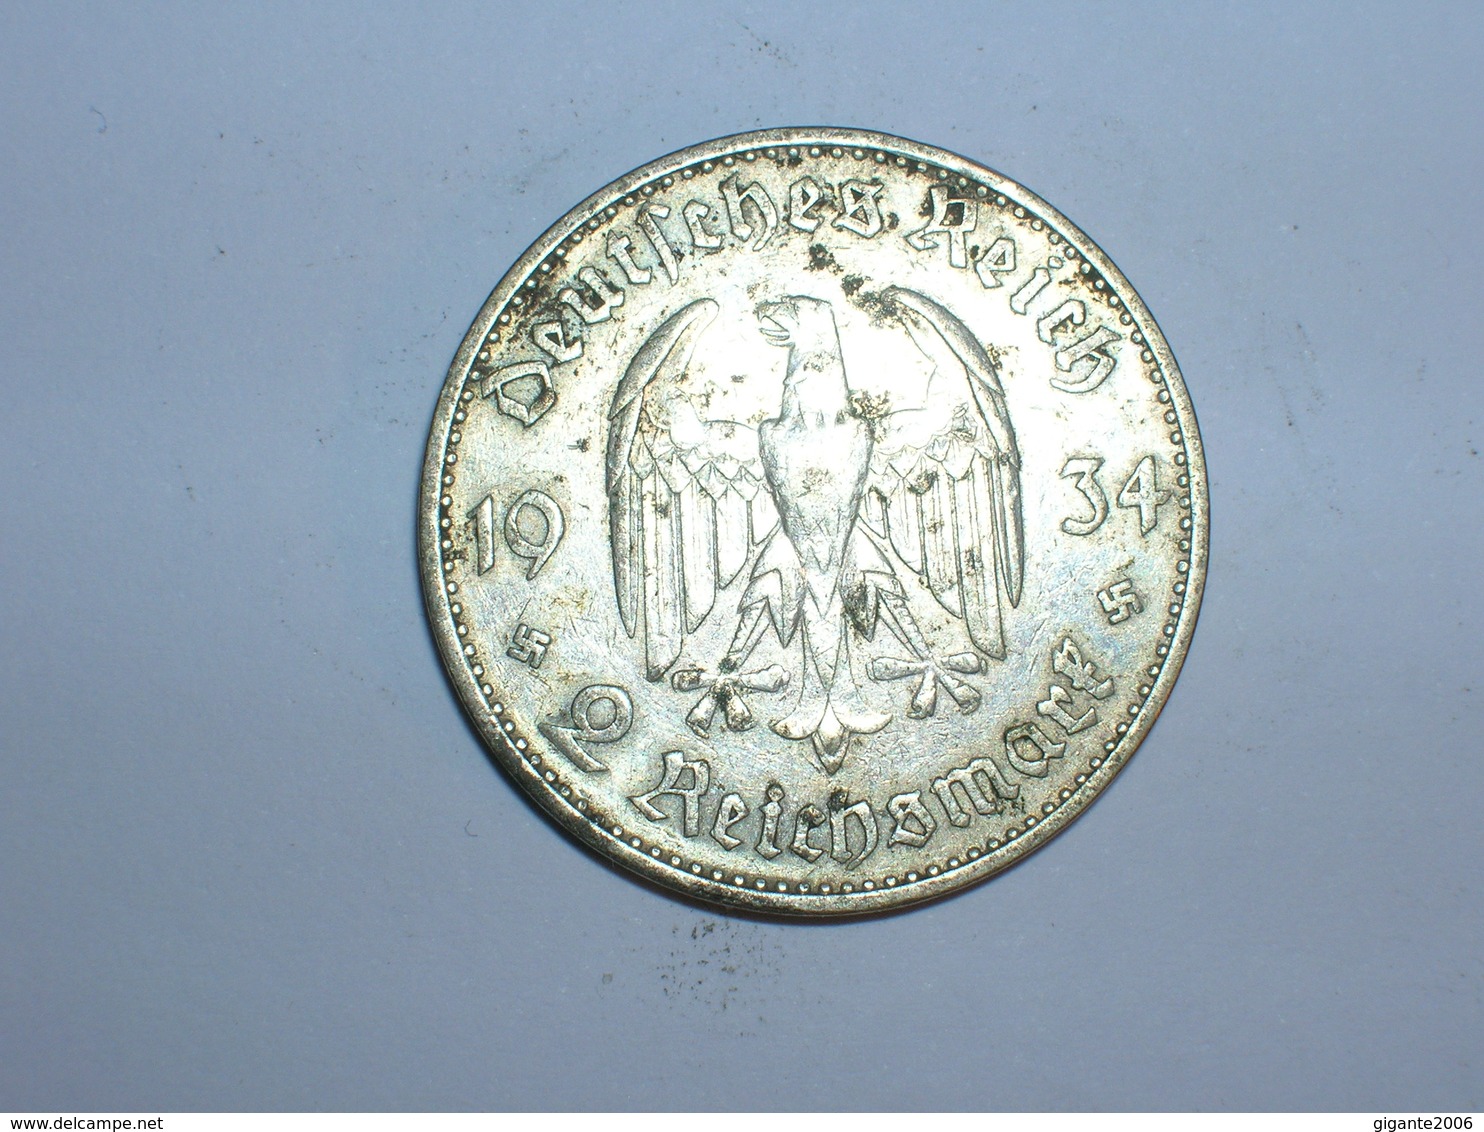 ALEMANIA- 2 MARCOS PLATA 1934 A (1018) - 2 Reichsmark